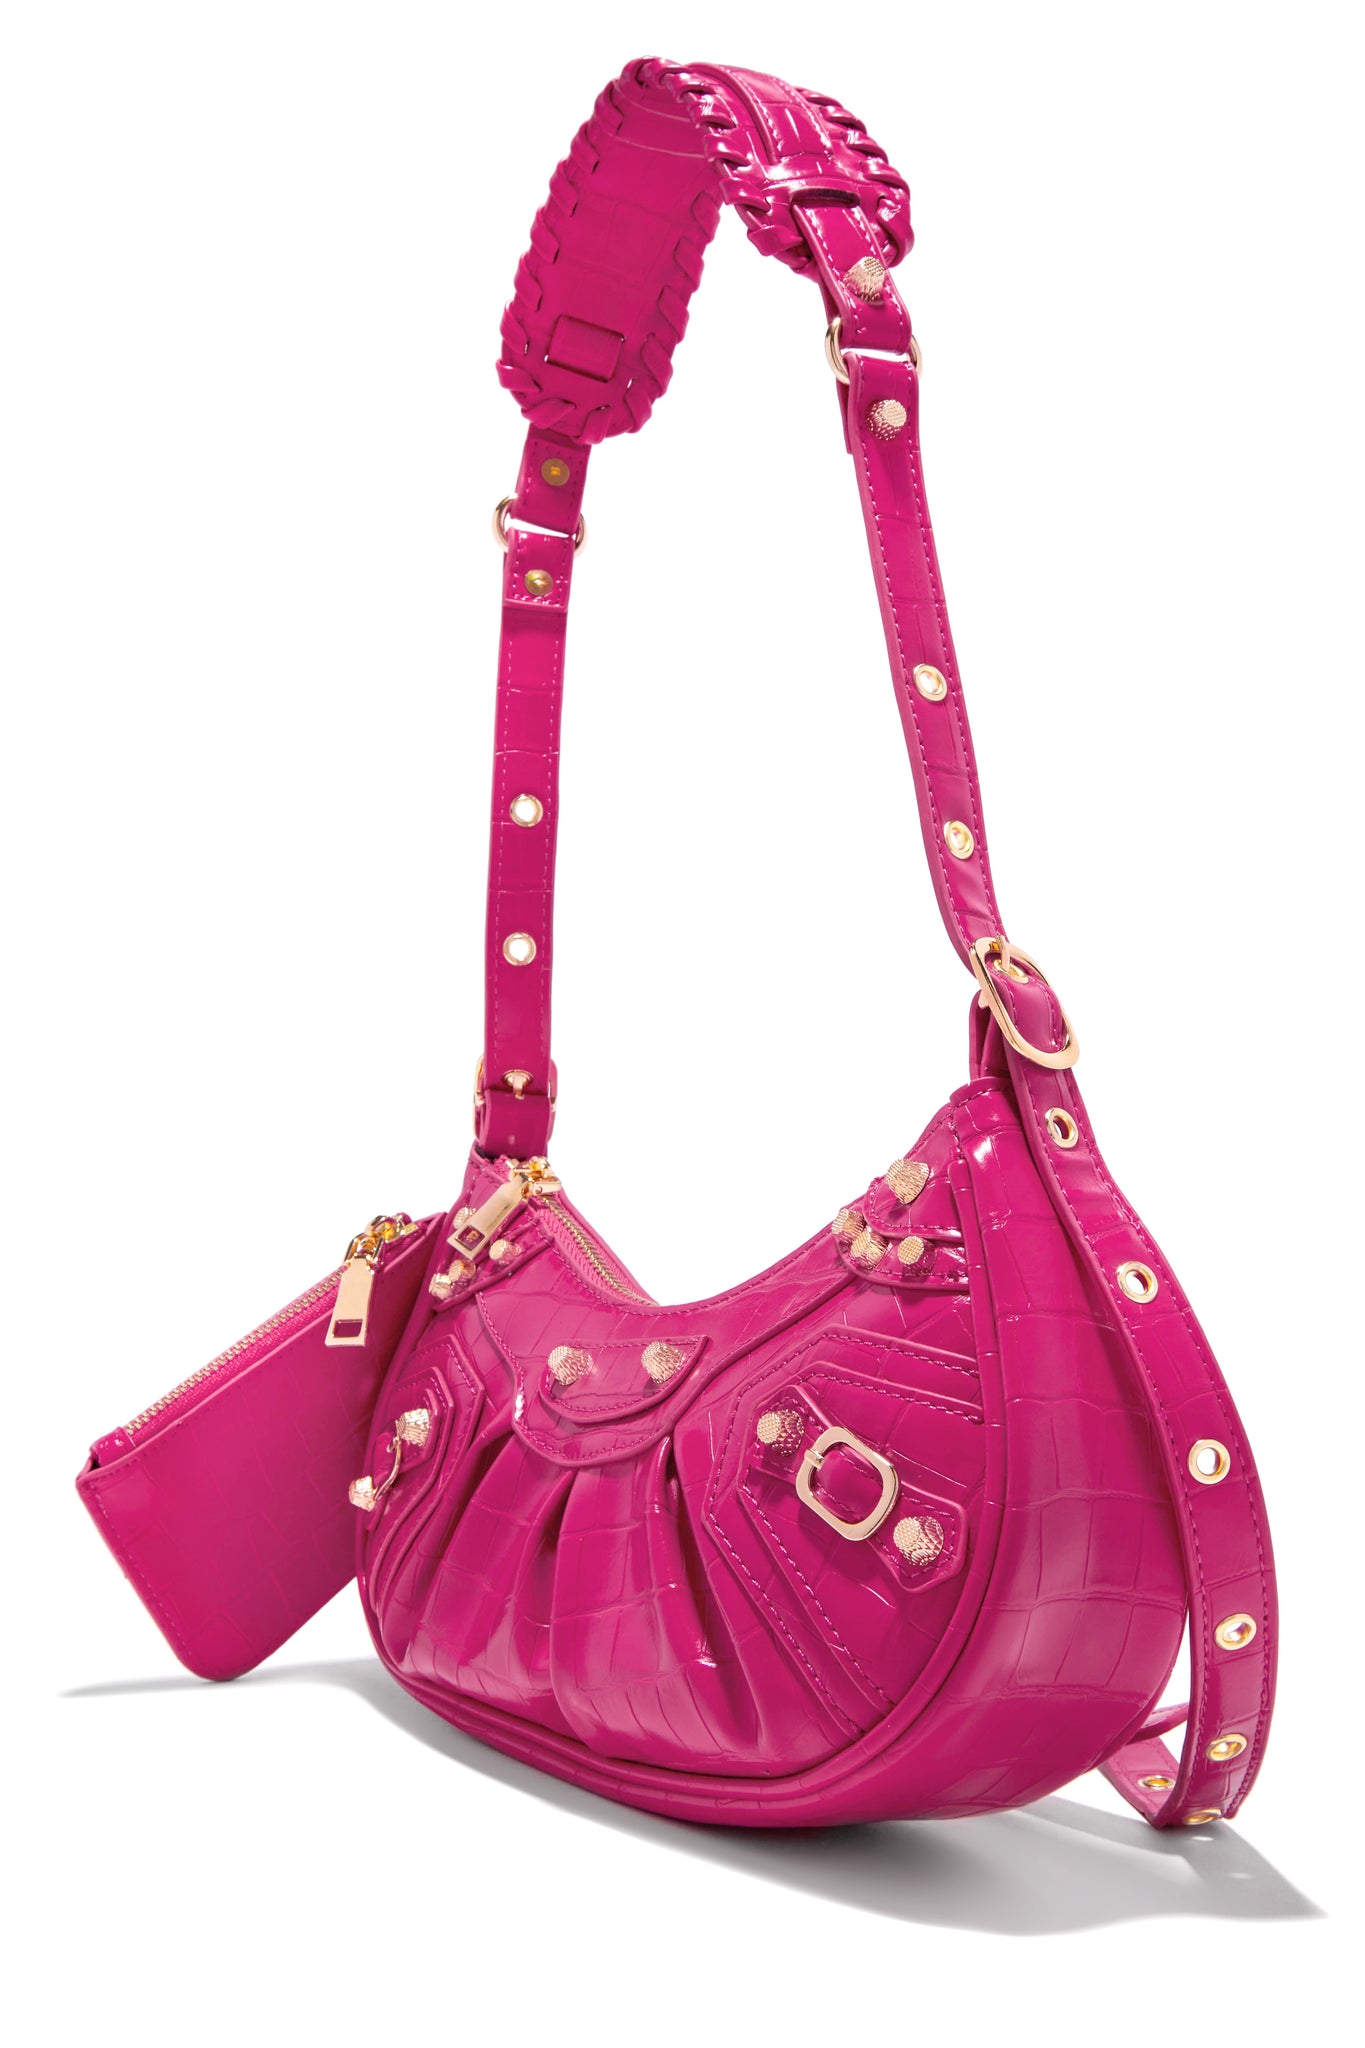 Miss Lola  Concert Ready Pink Metallic Handbag – MISS LOLA